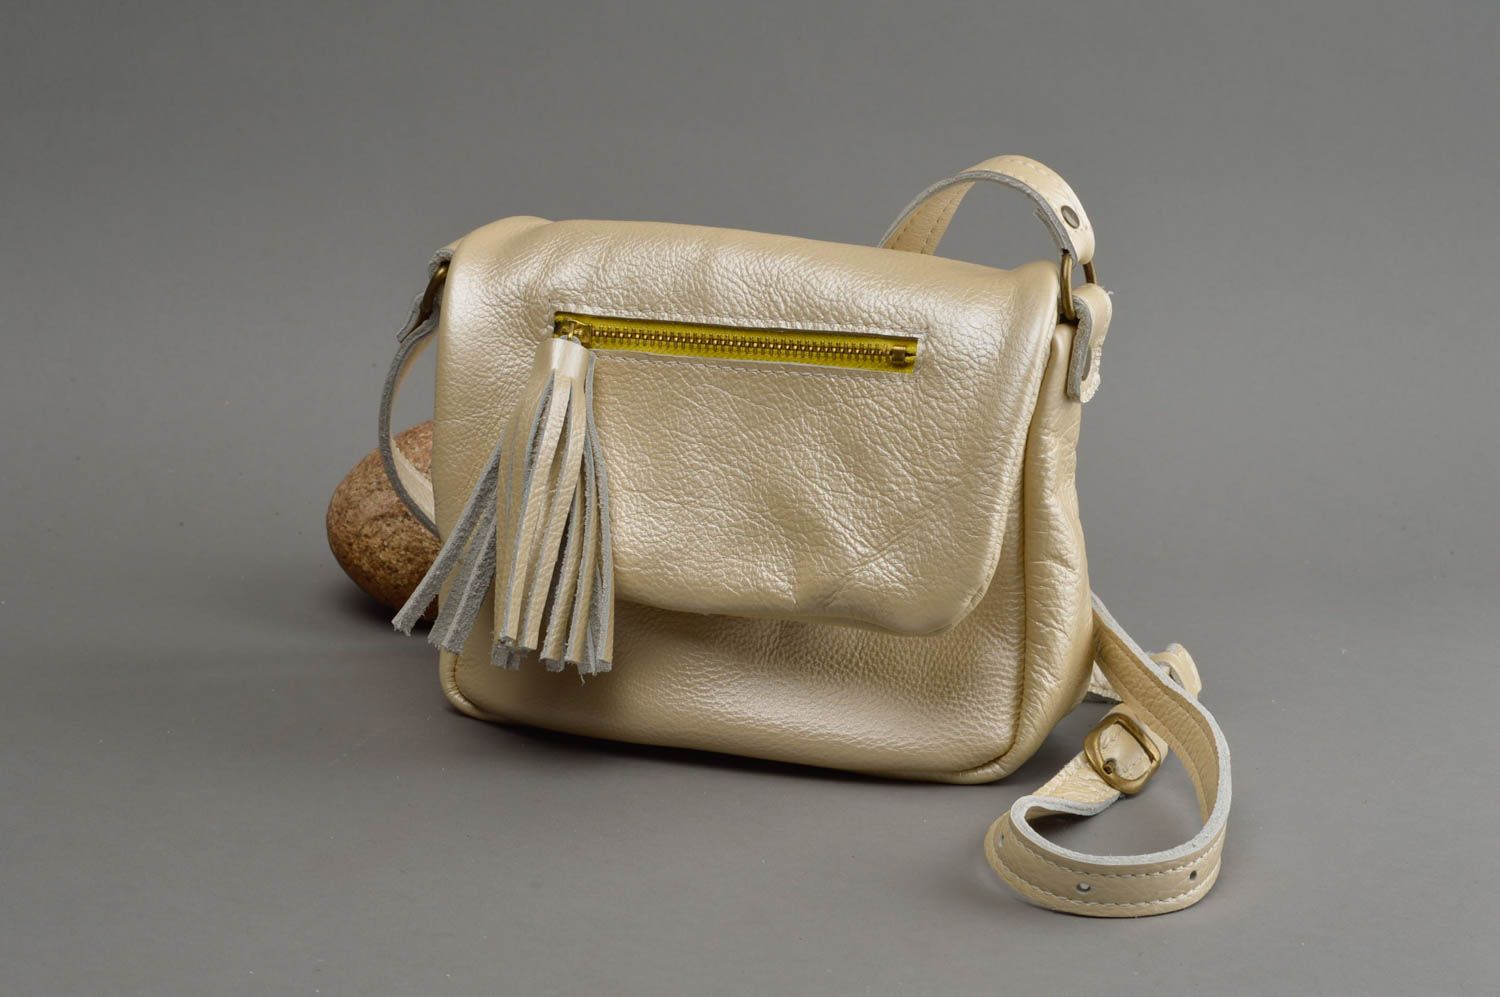 Unusual small handmade leather handbag shoulder bag designs leather goods photo 1